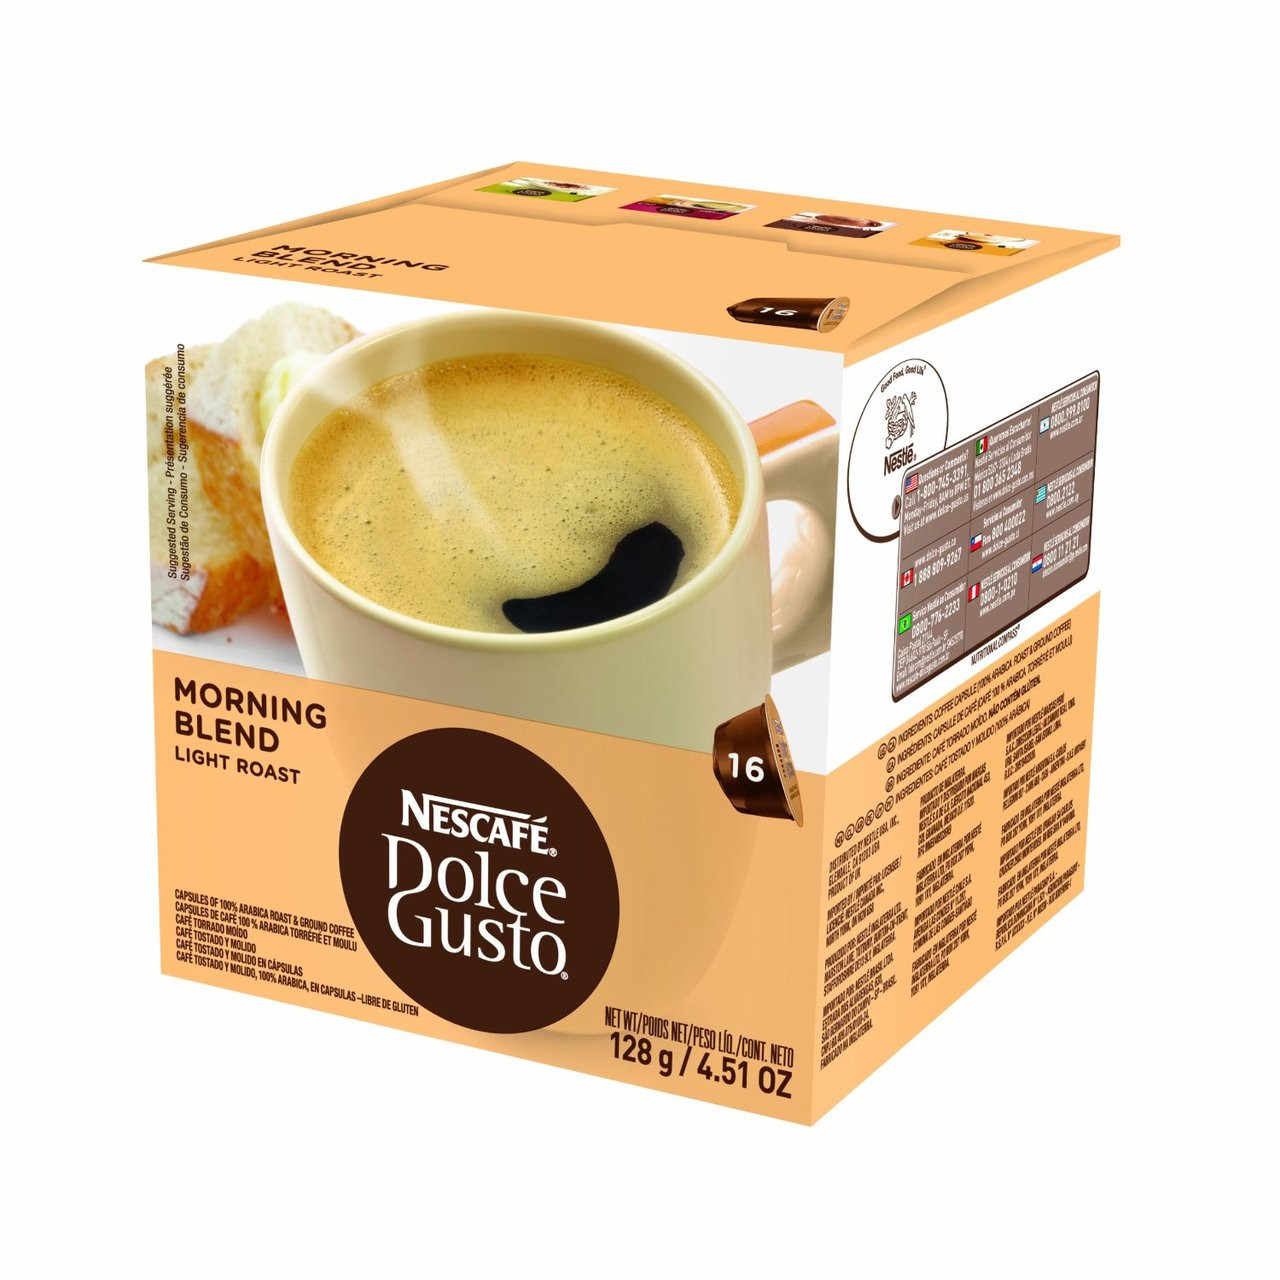 Nescafe Dolce Gusto Skinny Cappuccino Coffee Pods, 16 Capsules - 161g 